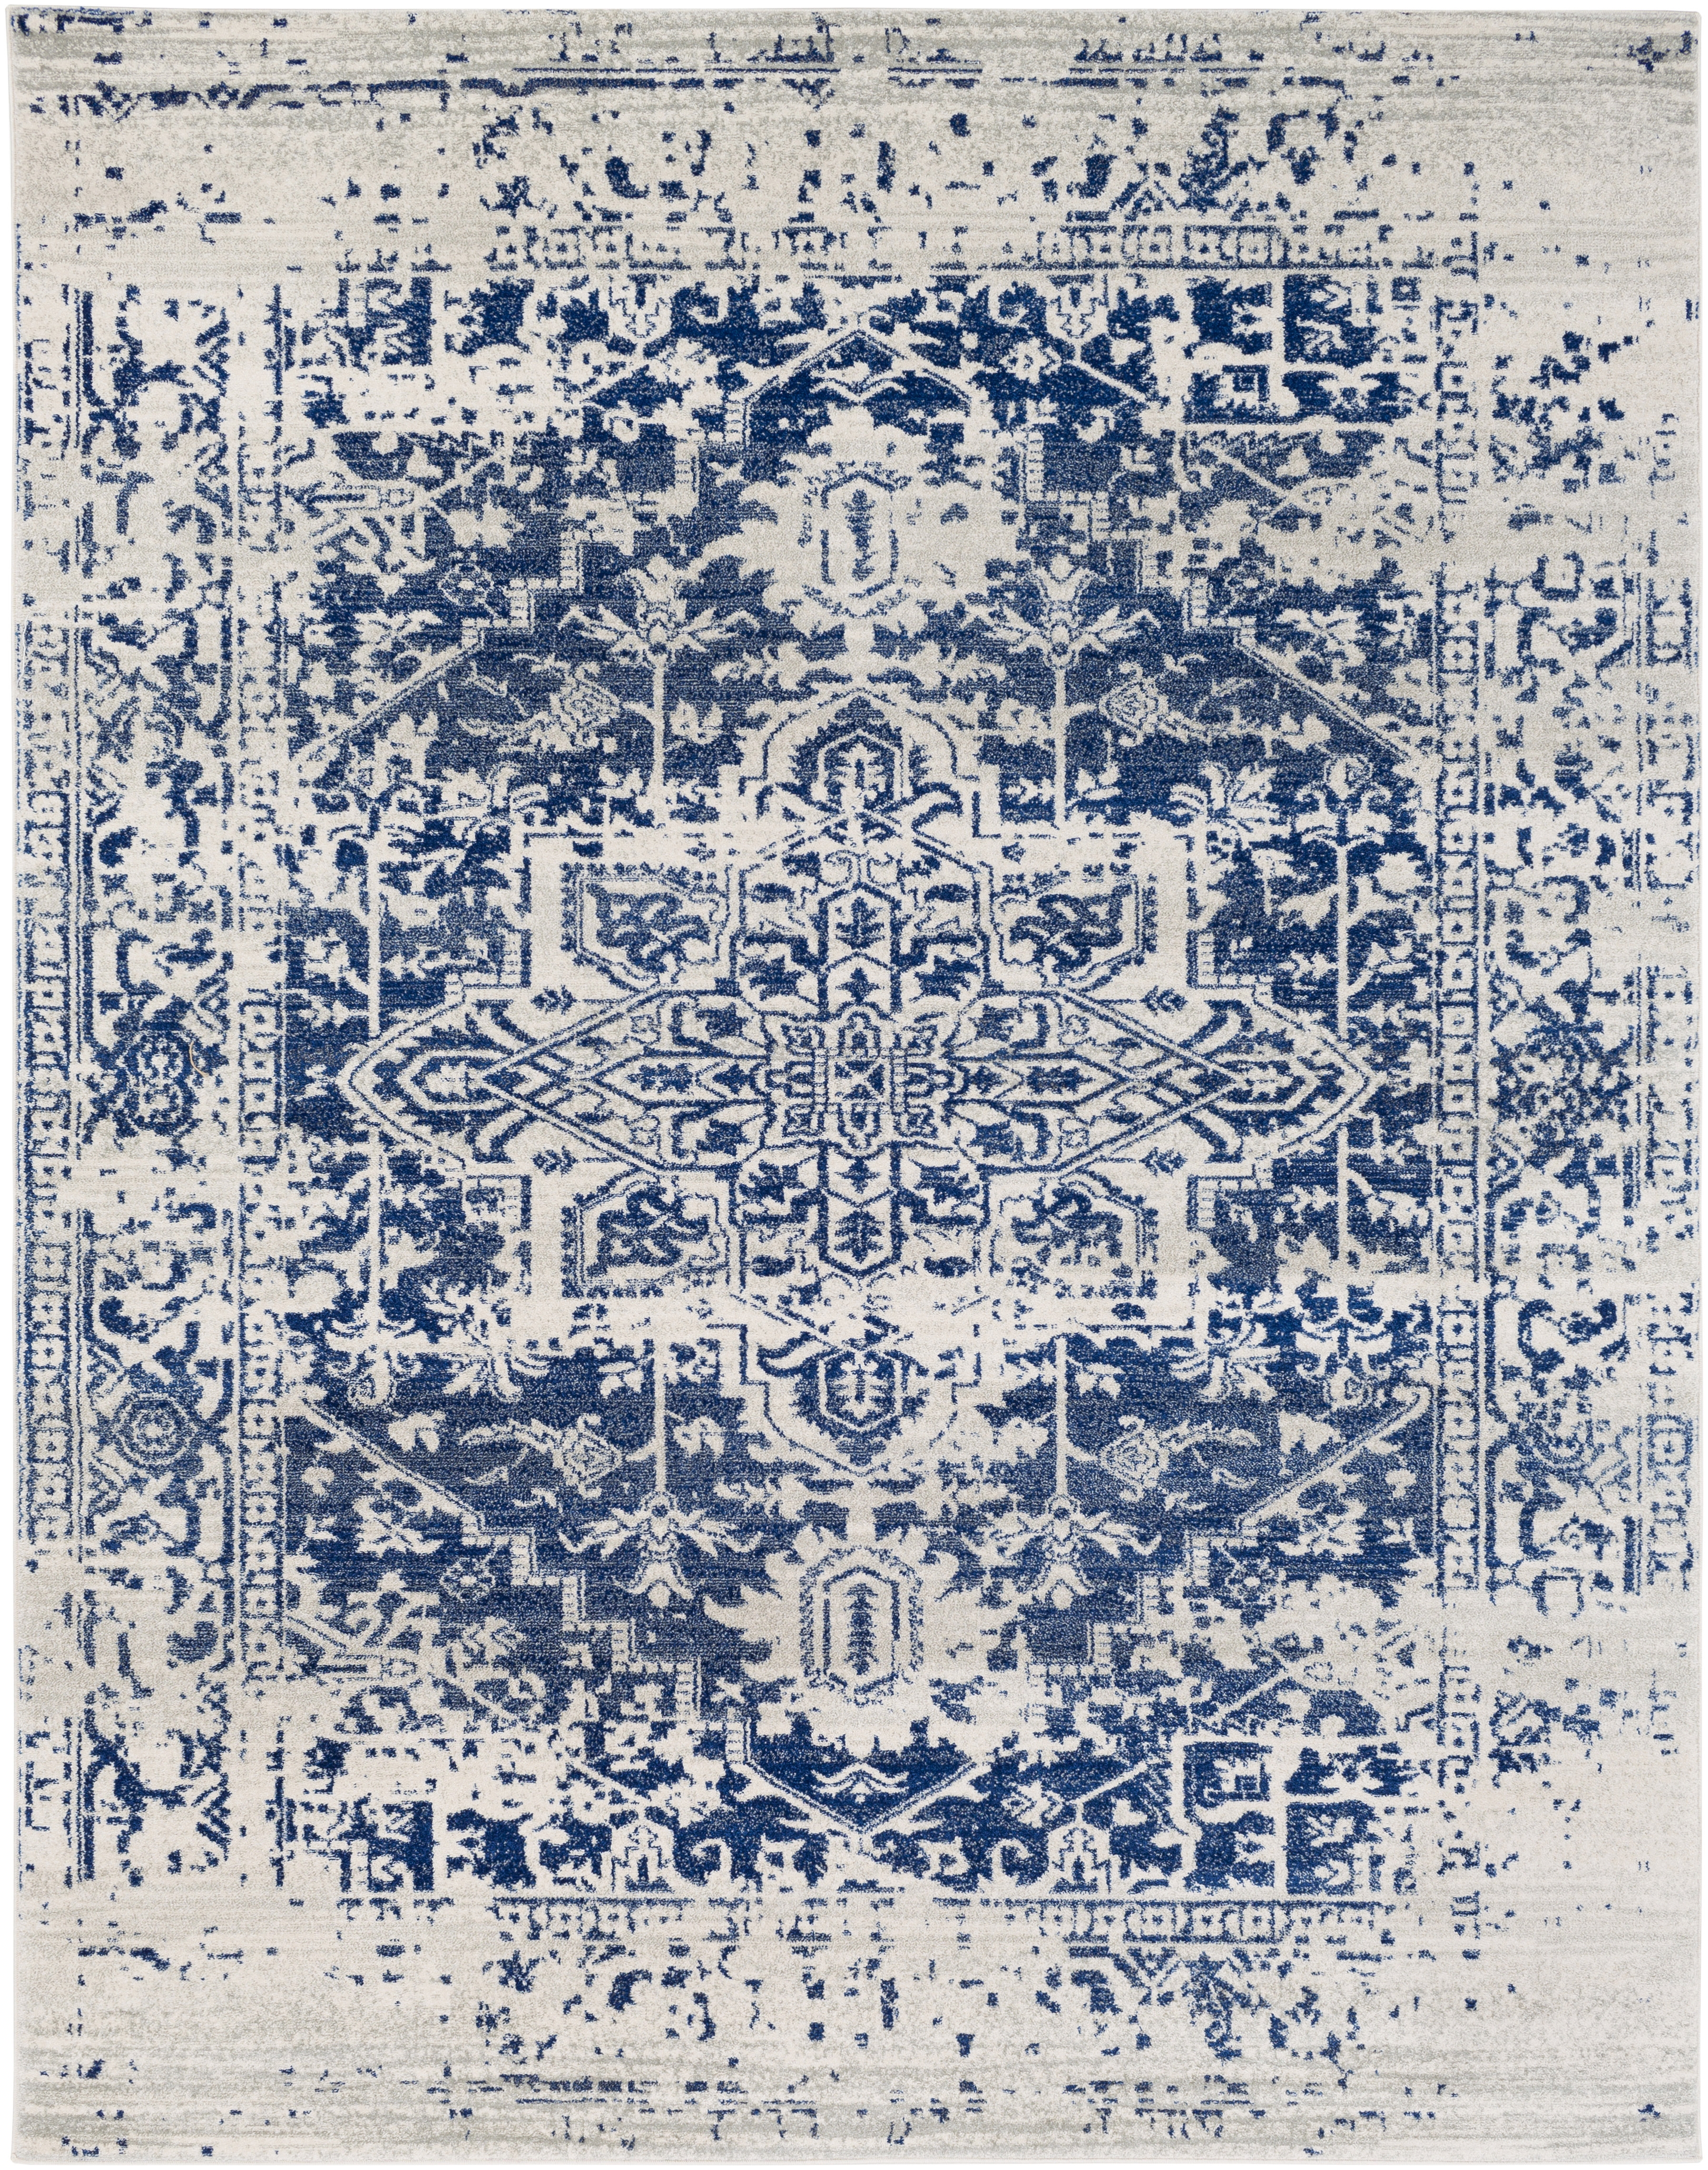 Harput Rug, Blue, 7'10" x 10'3" - Image 0